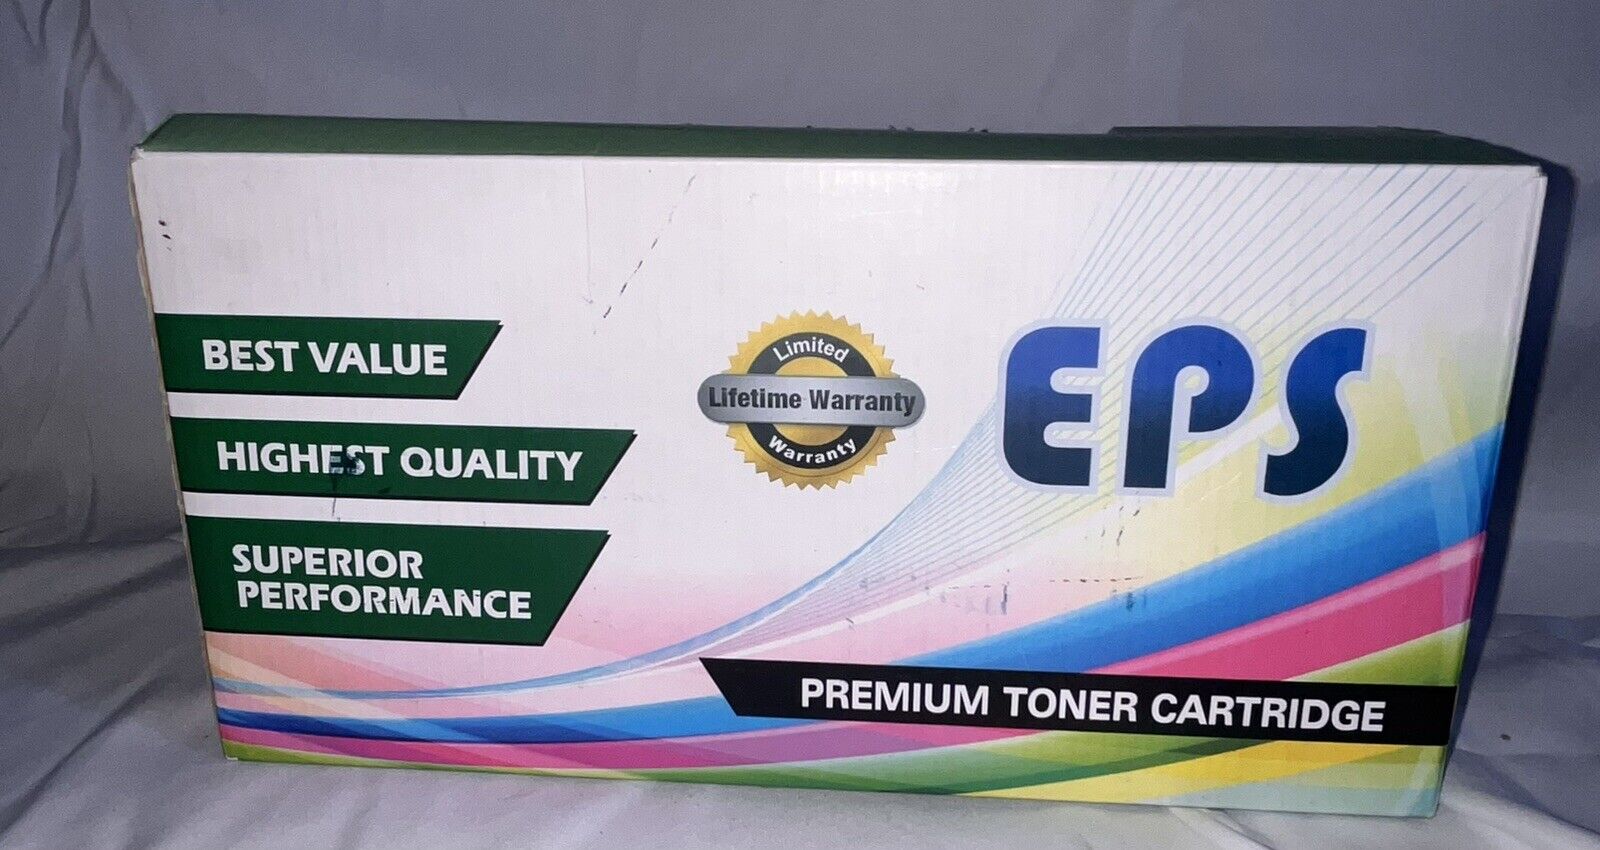 EPS Premium Toner Cartridge replacement for Dell B1160